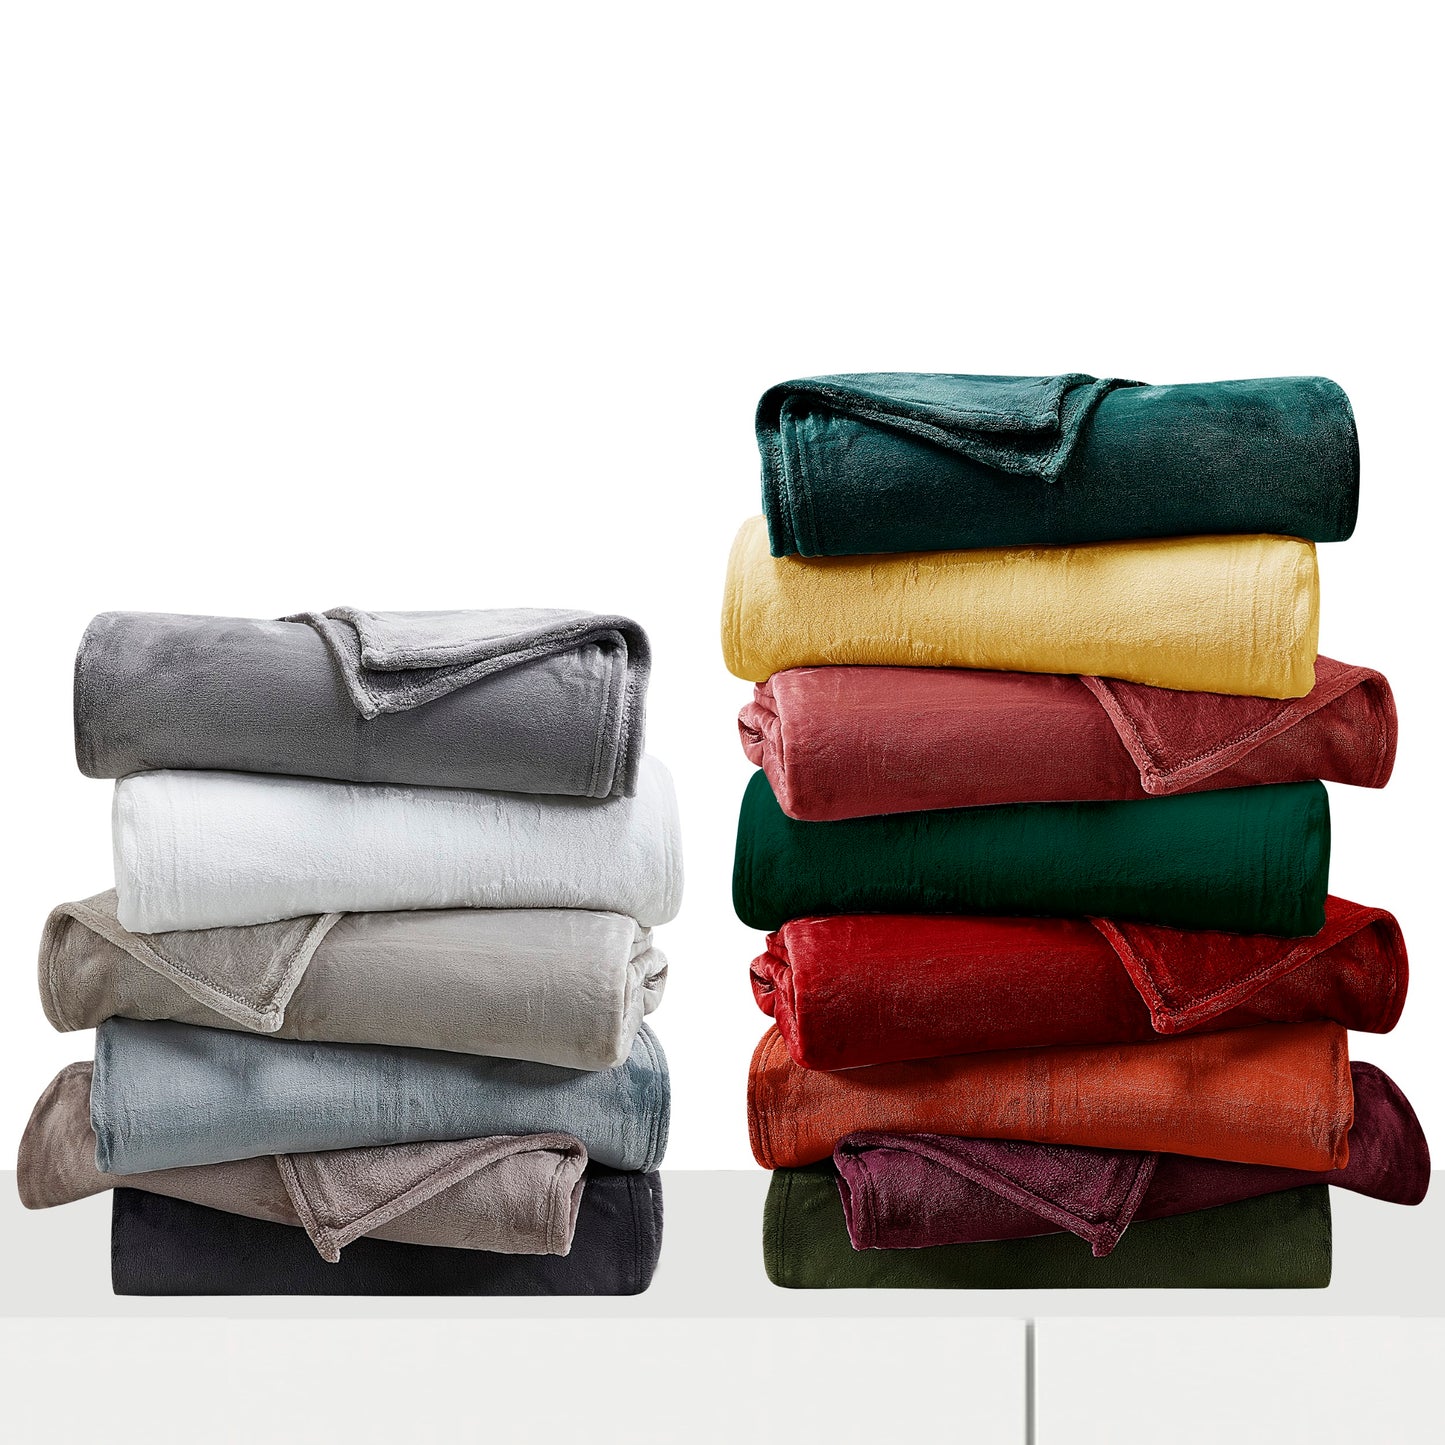 400 Series Solid Plush Blanket - Teal